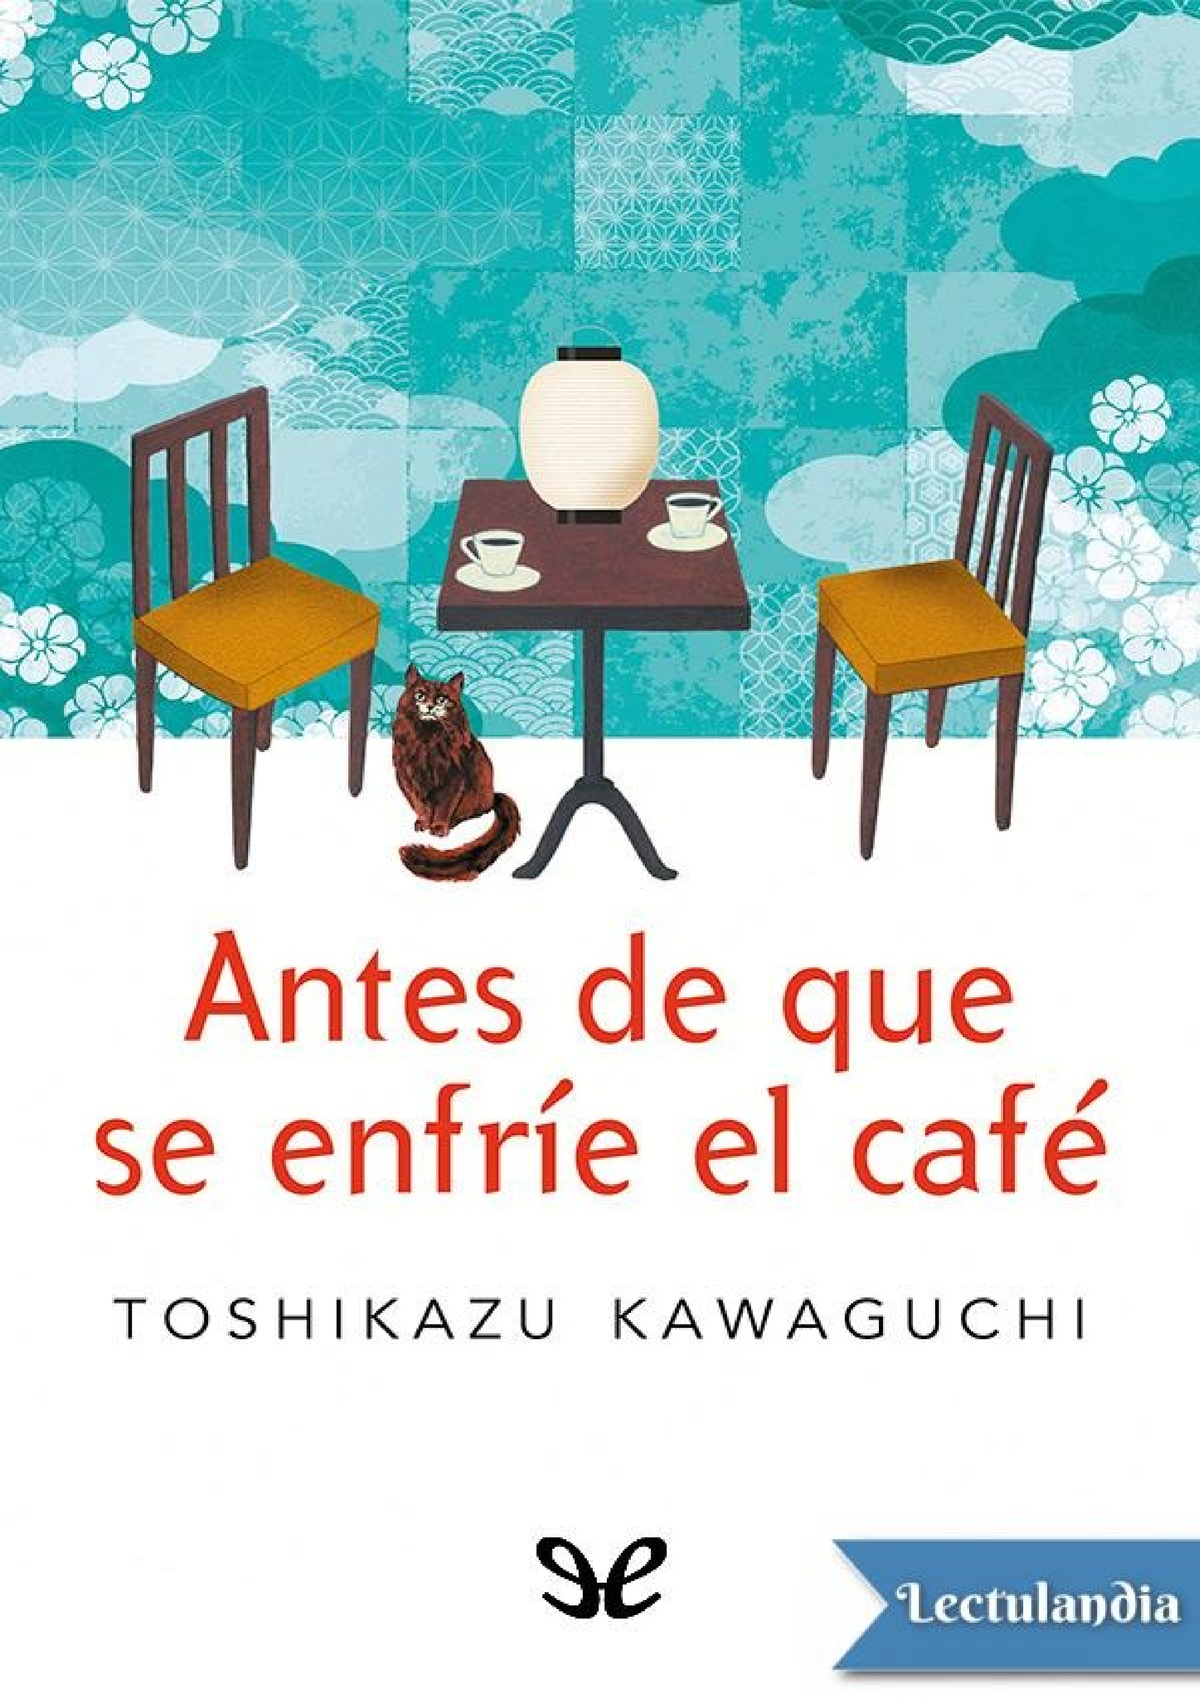 Antes que o cafe esfrie - Toshikazu Kawaguchi - Flipbook by